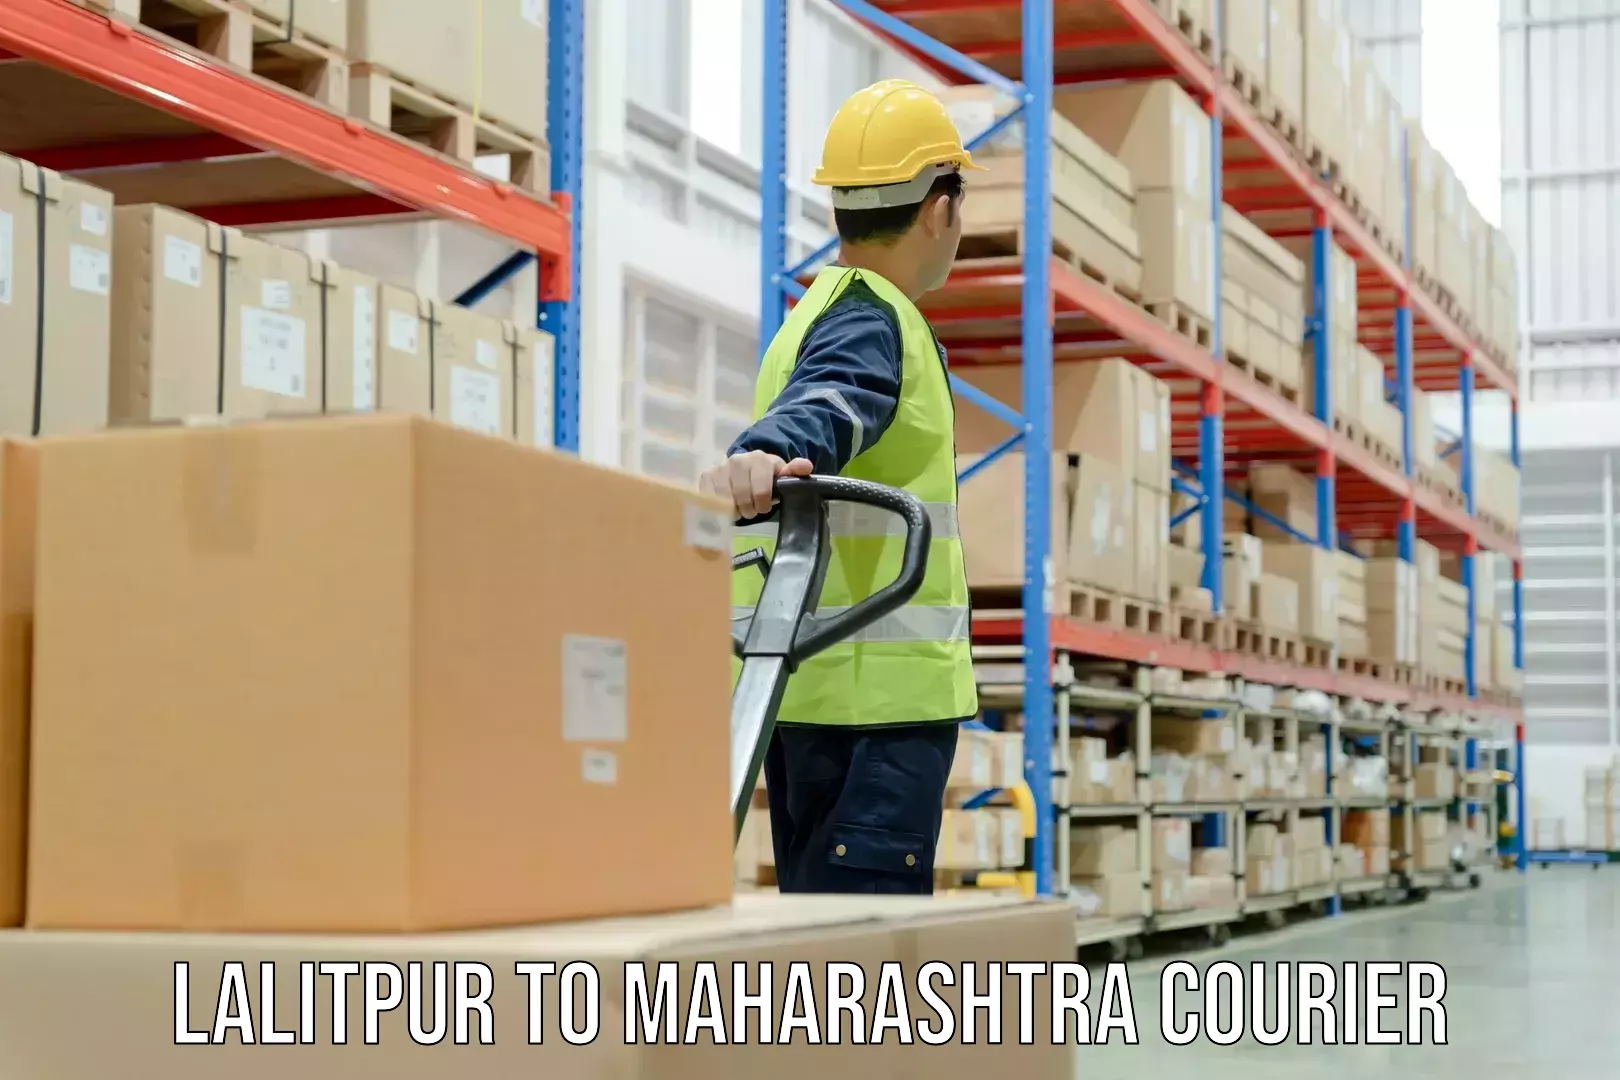 Courier service partnerships Lalitpur to Maharashtra